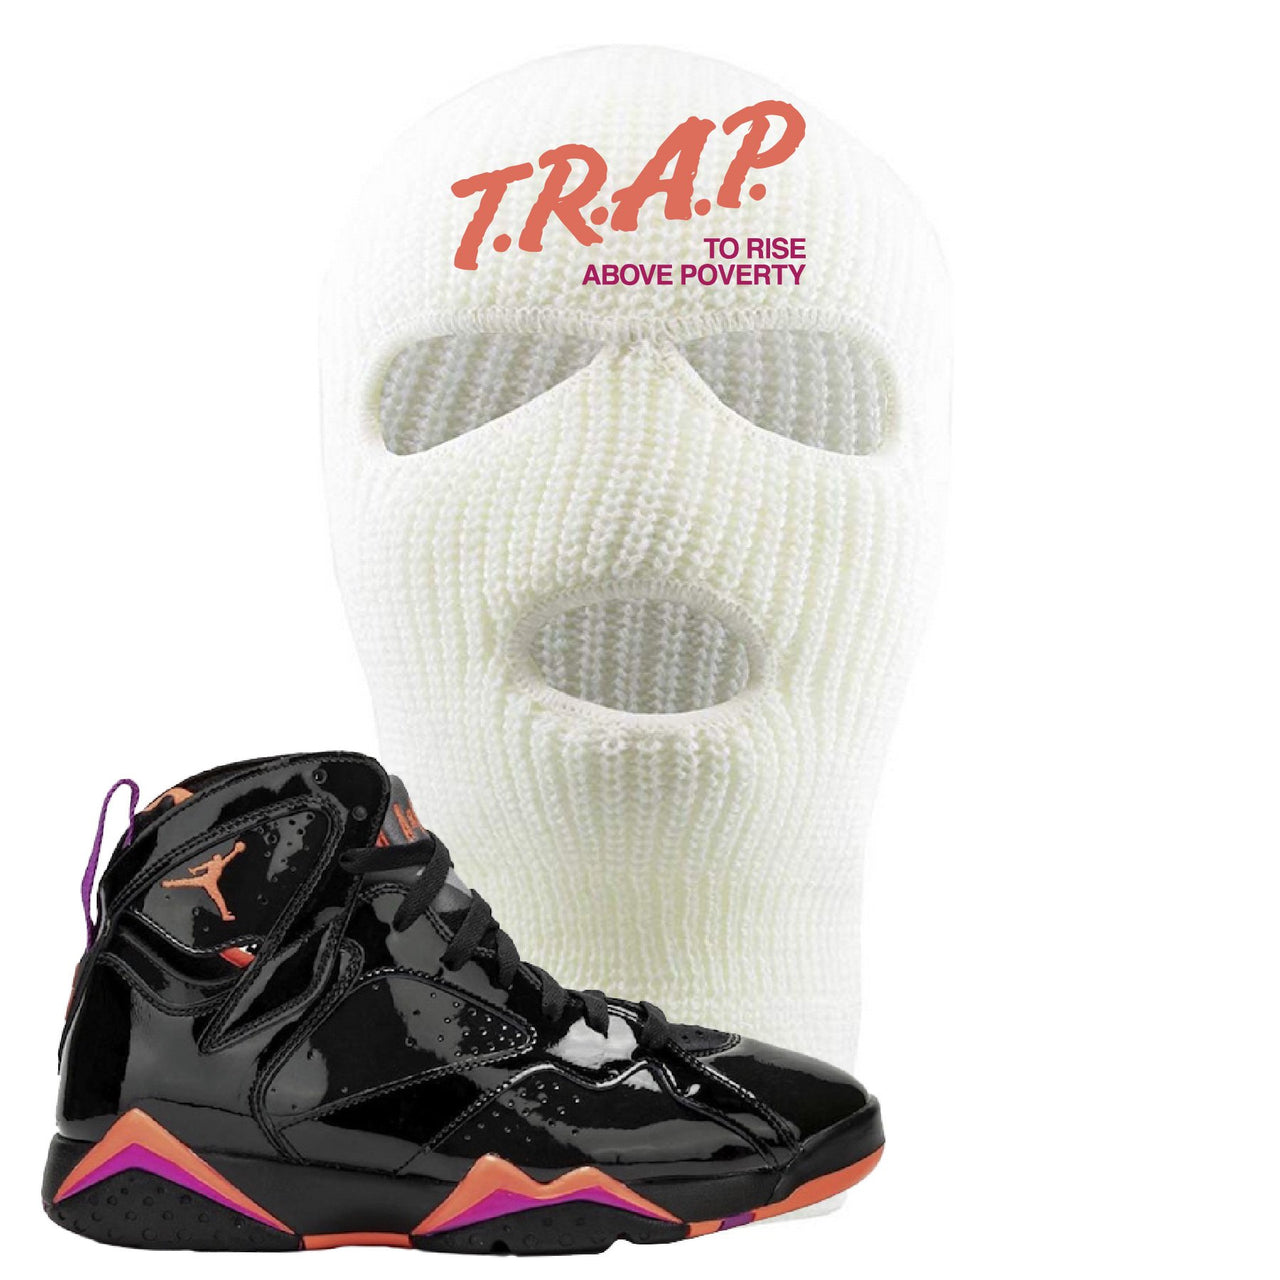 Jordan 7 WMNS Black Patent Leather Trap To Rise Above Poverty White Sneaker Hook Up Ski Mask